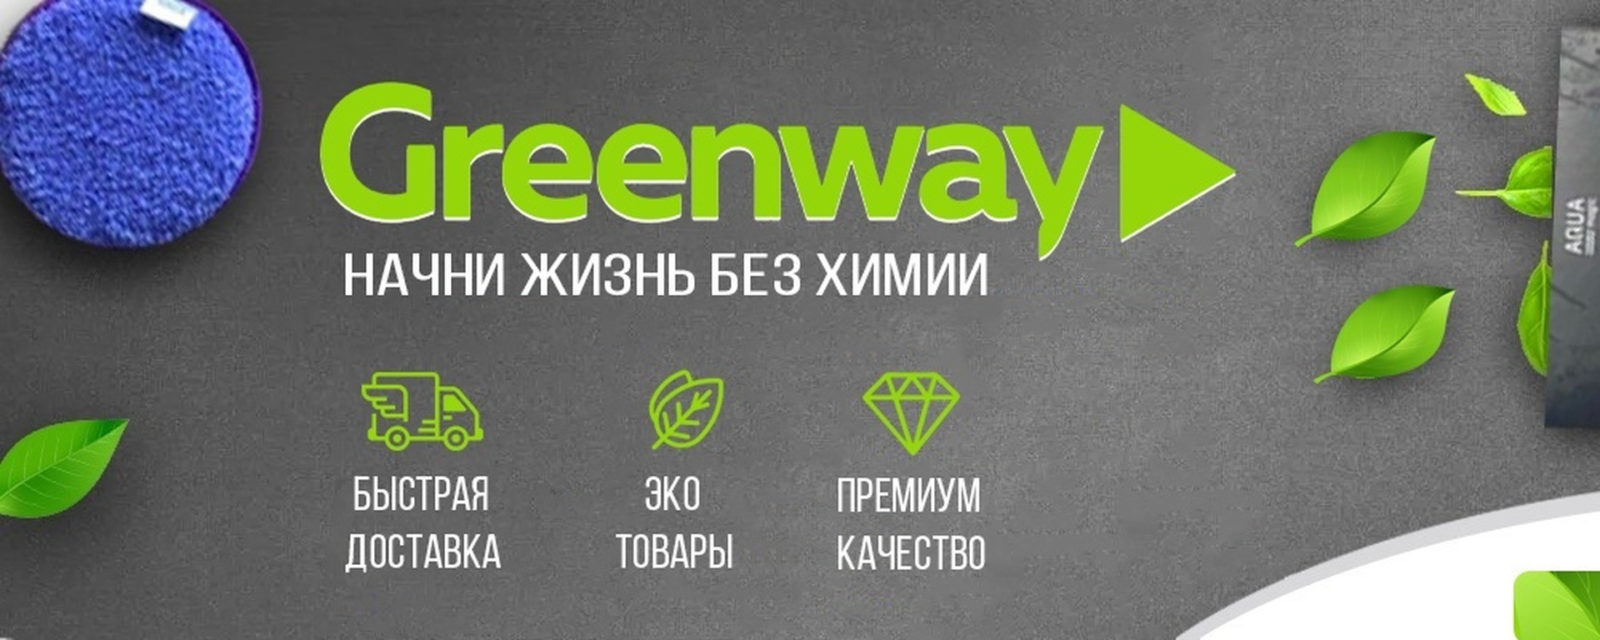 Greenway магазин